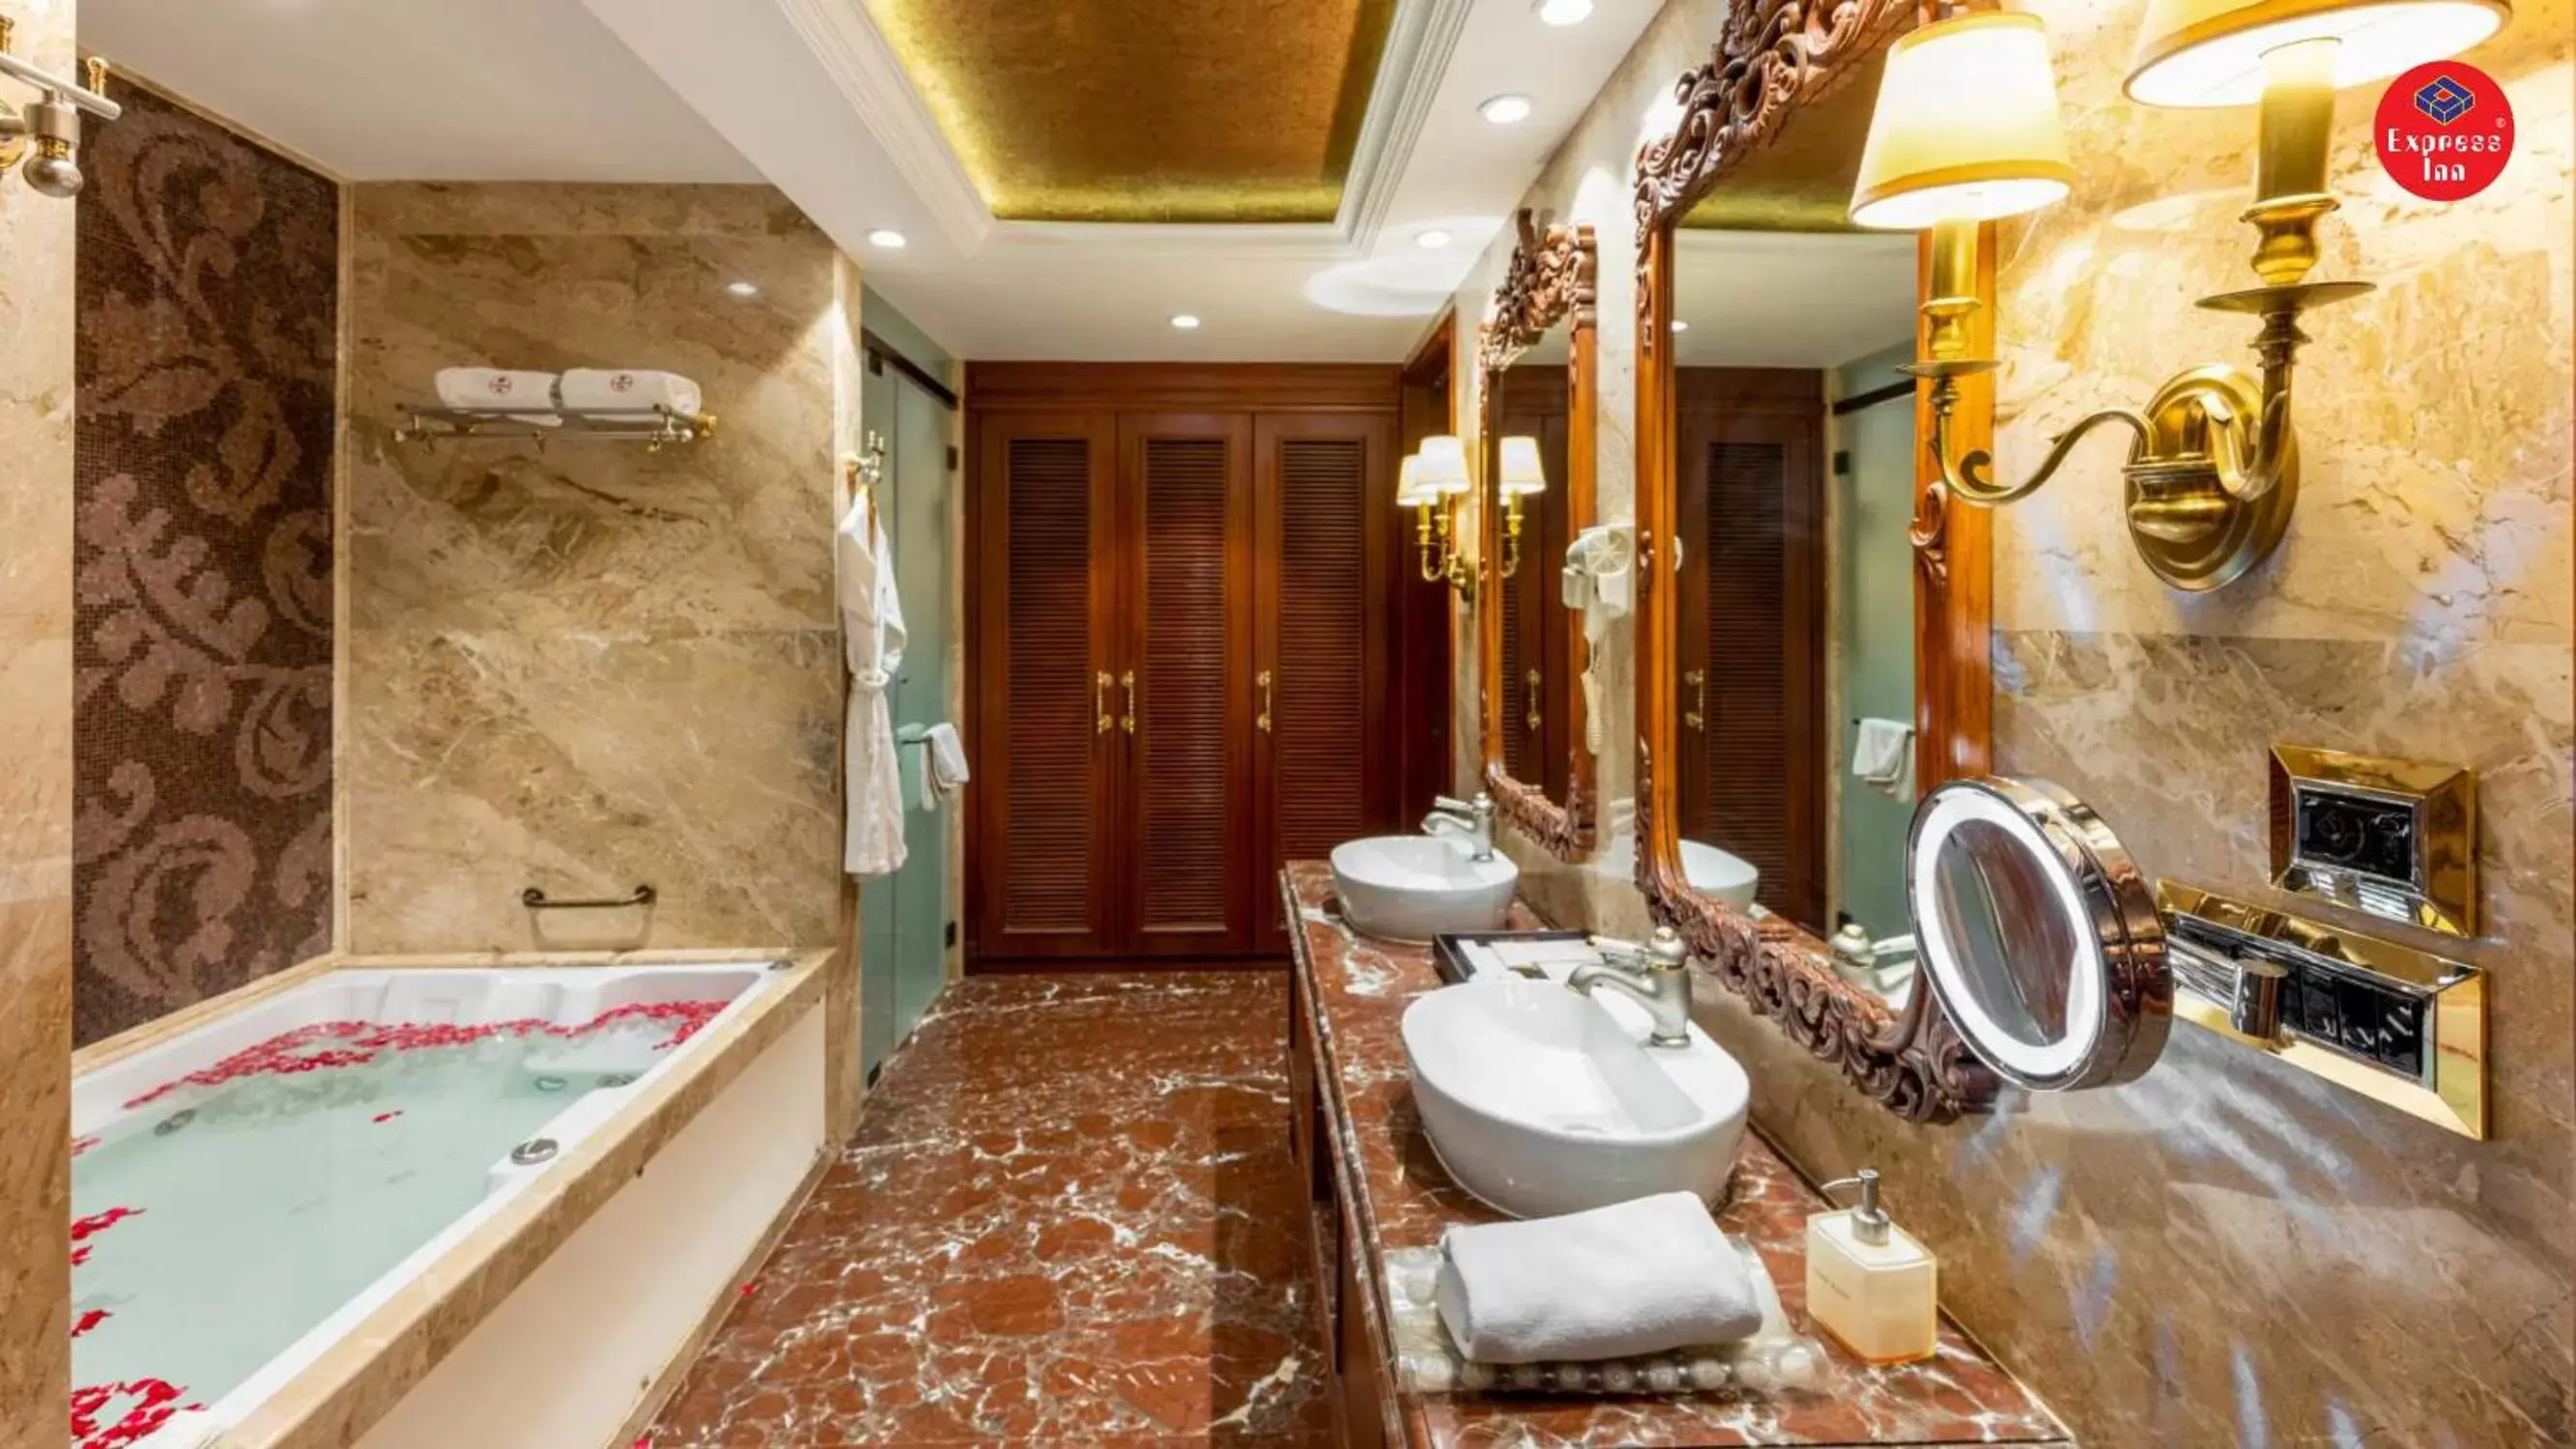 Toilet, Bathroom in Express Inn The Business Luxury Hotel